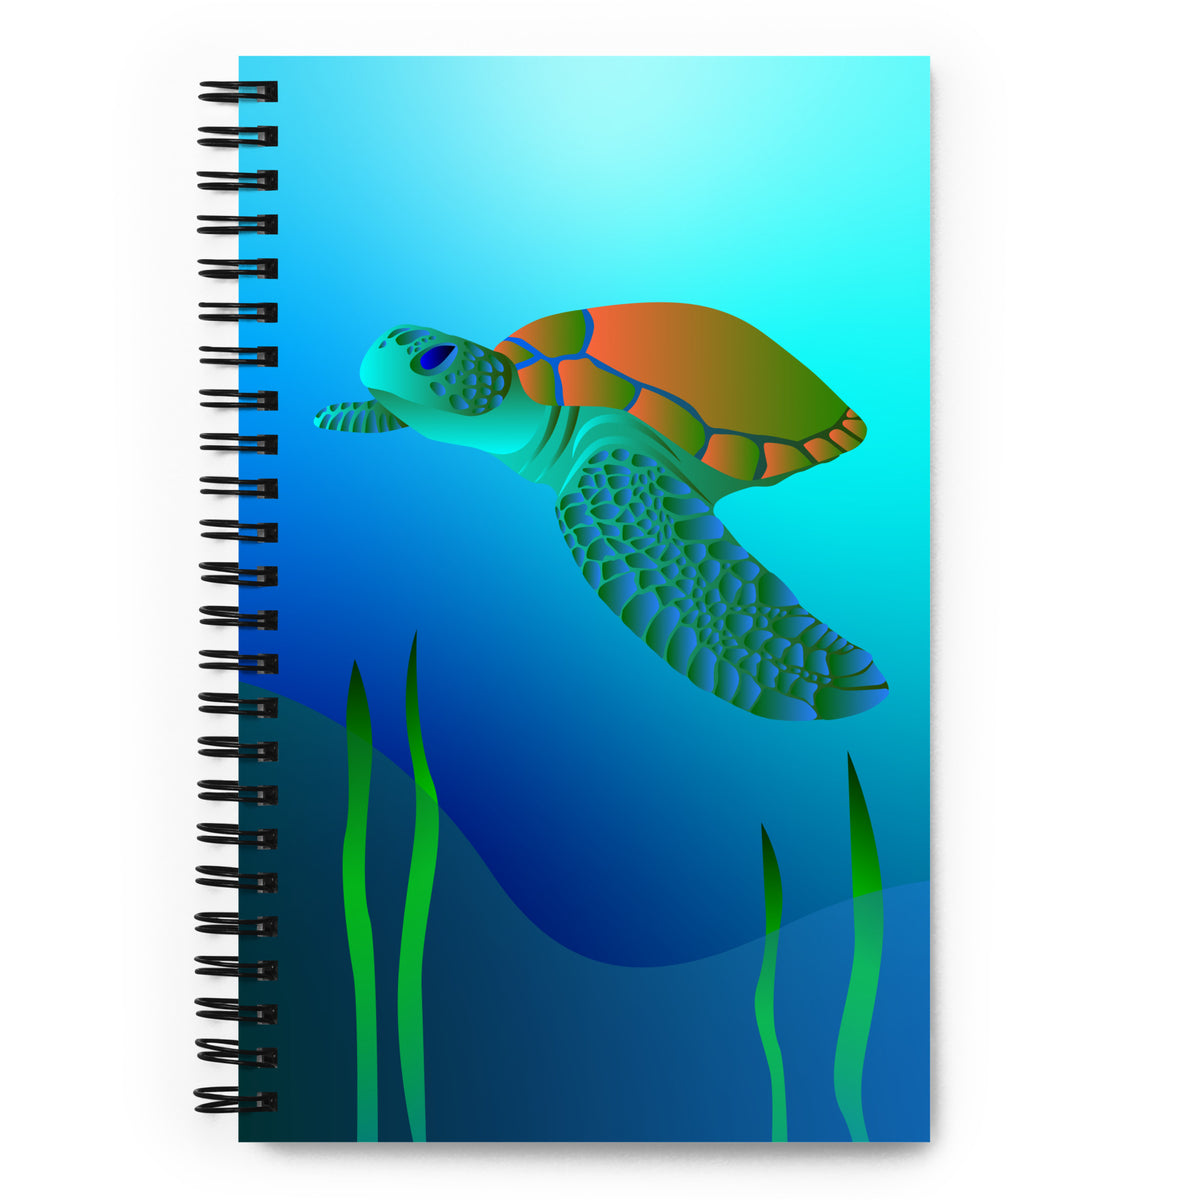 Turtle Journal